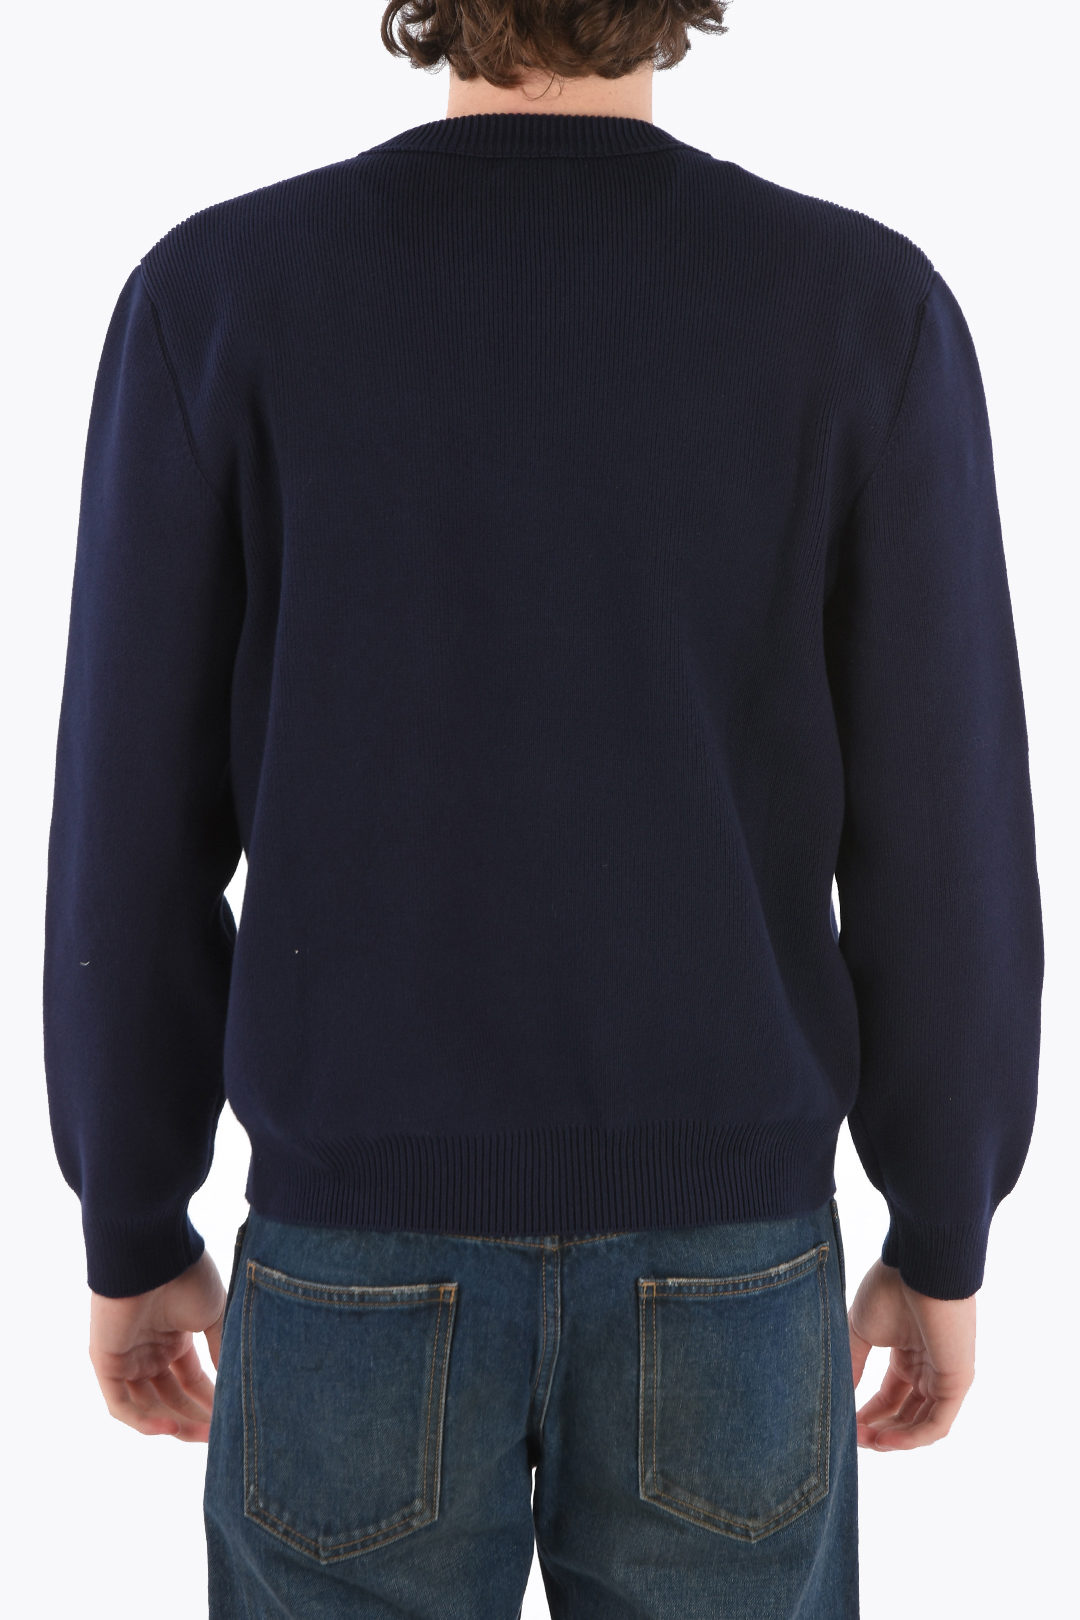 Celine Embroidered logo crew-neck sweater men - Glamood Outlet